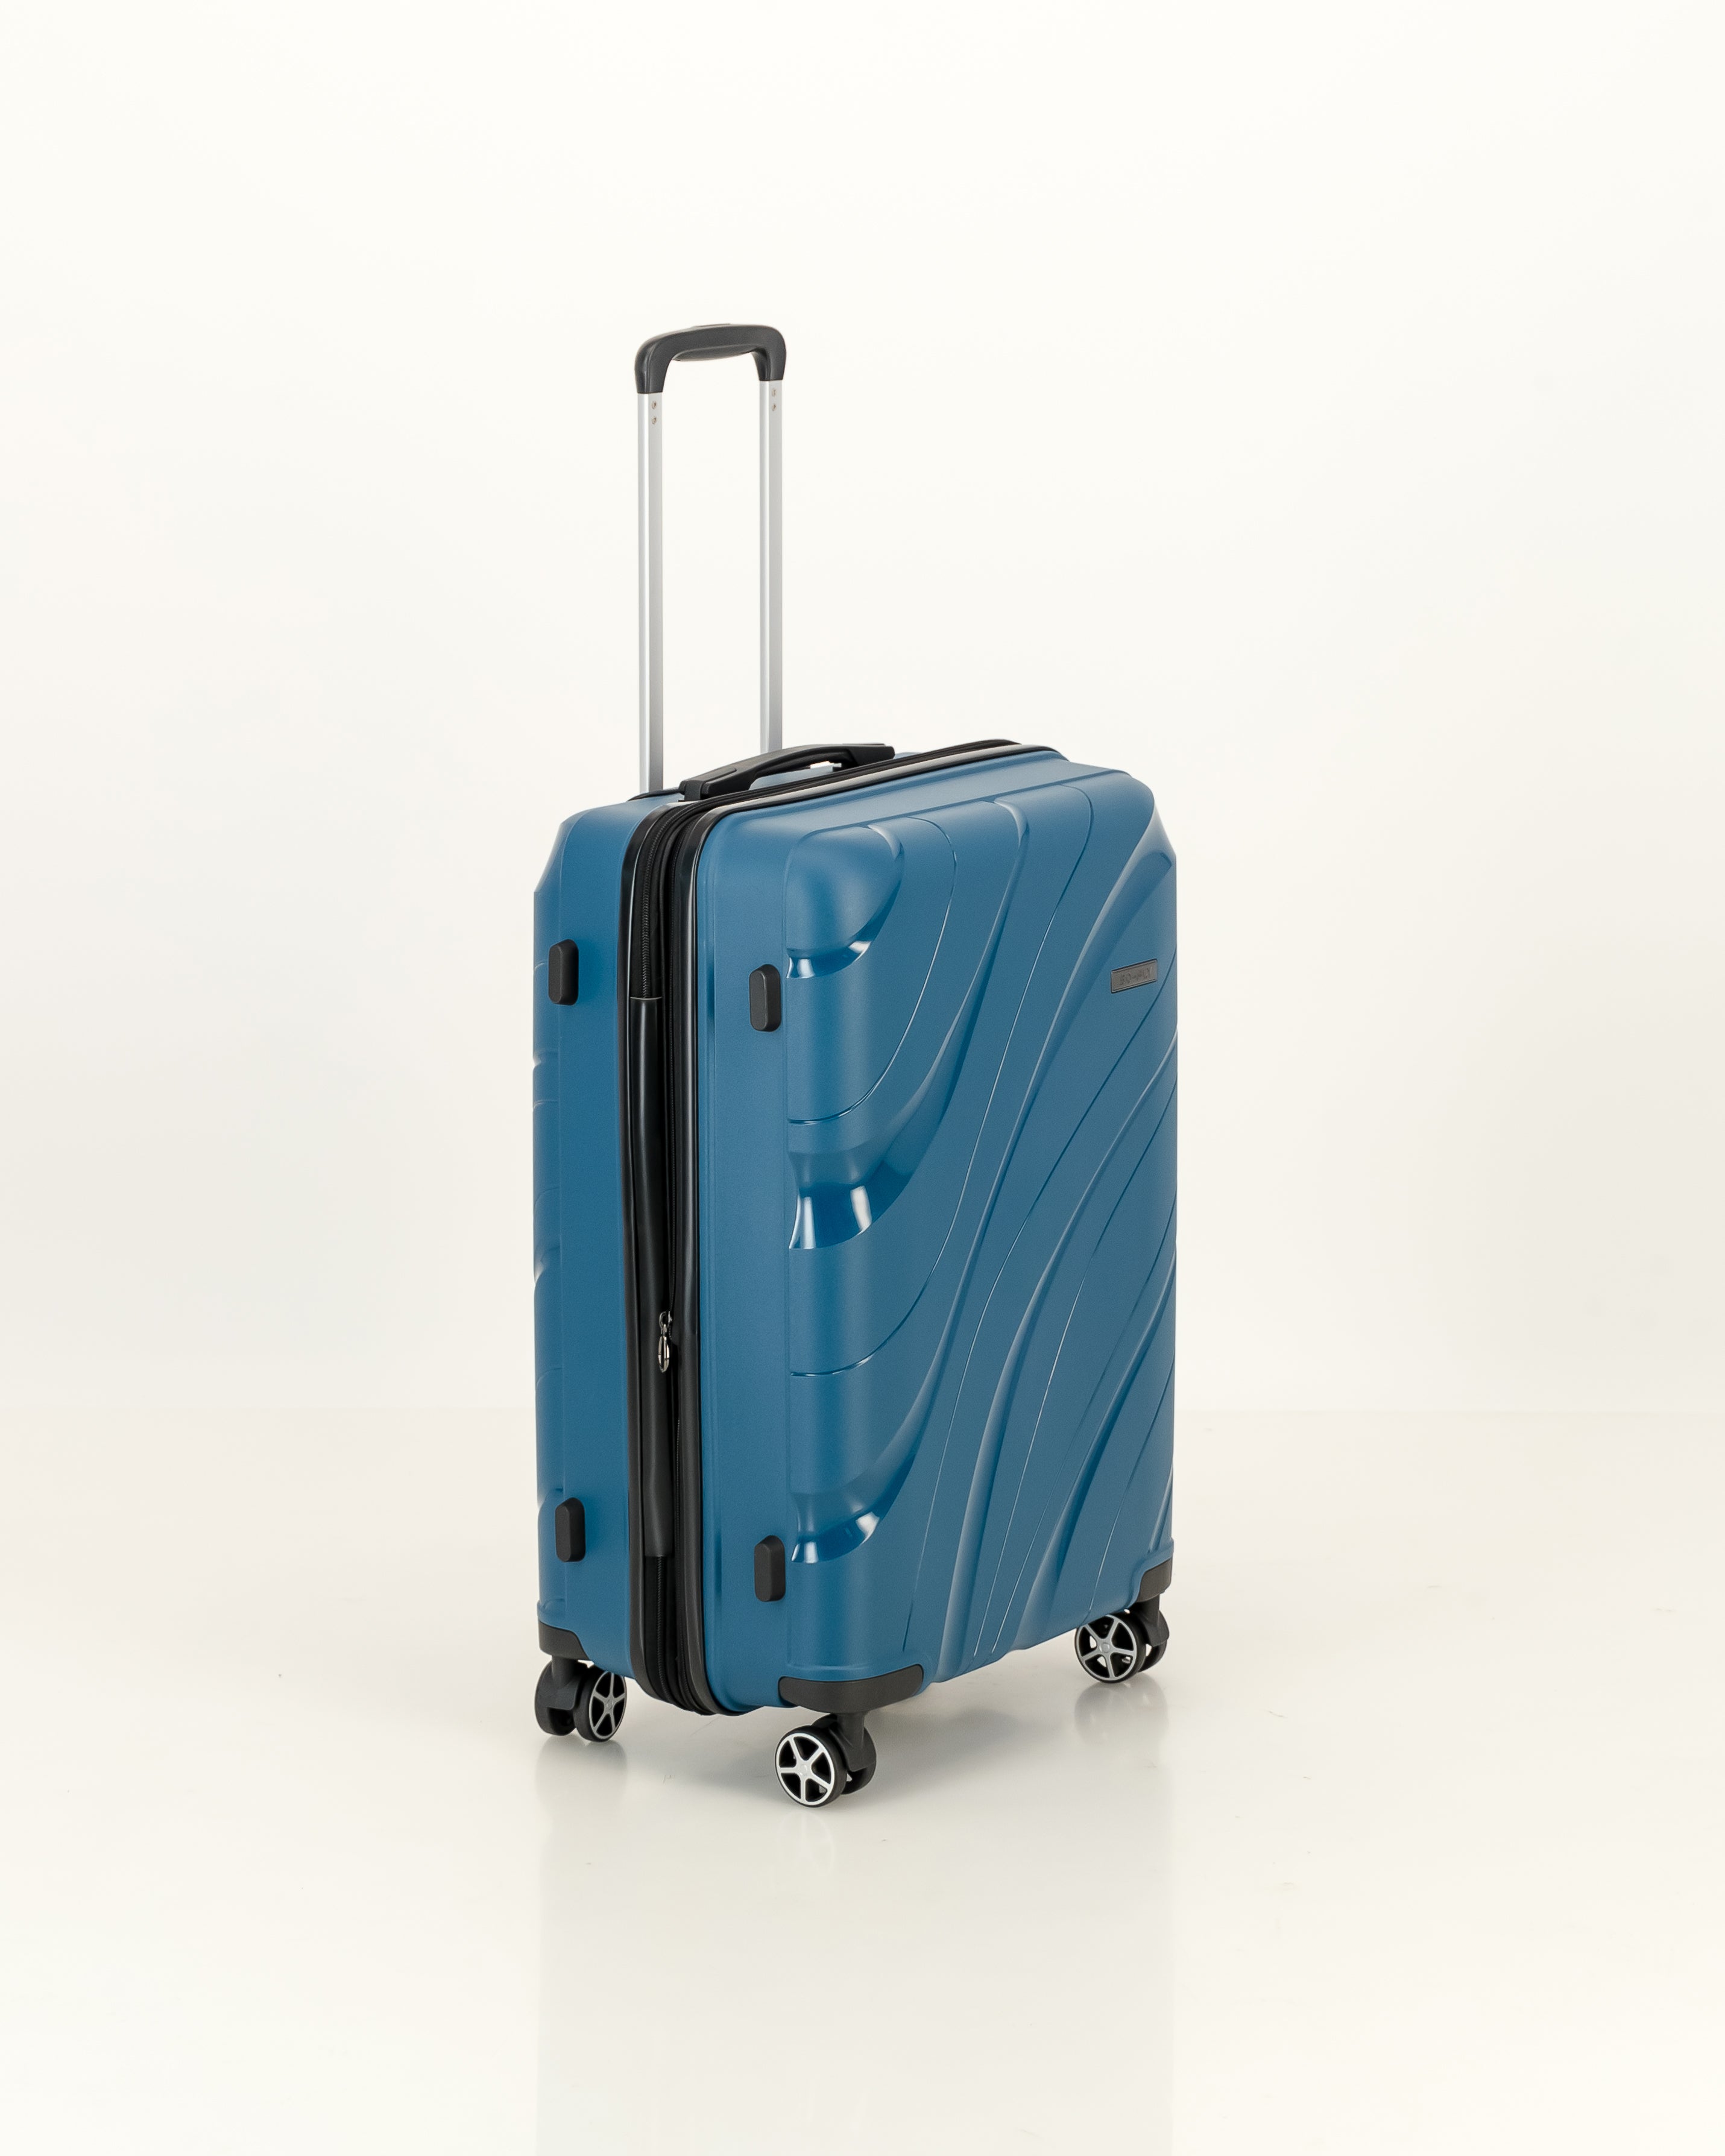 So-Fly Orbit 55cm Spinner Cabin Luggage